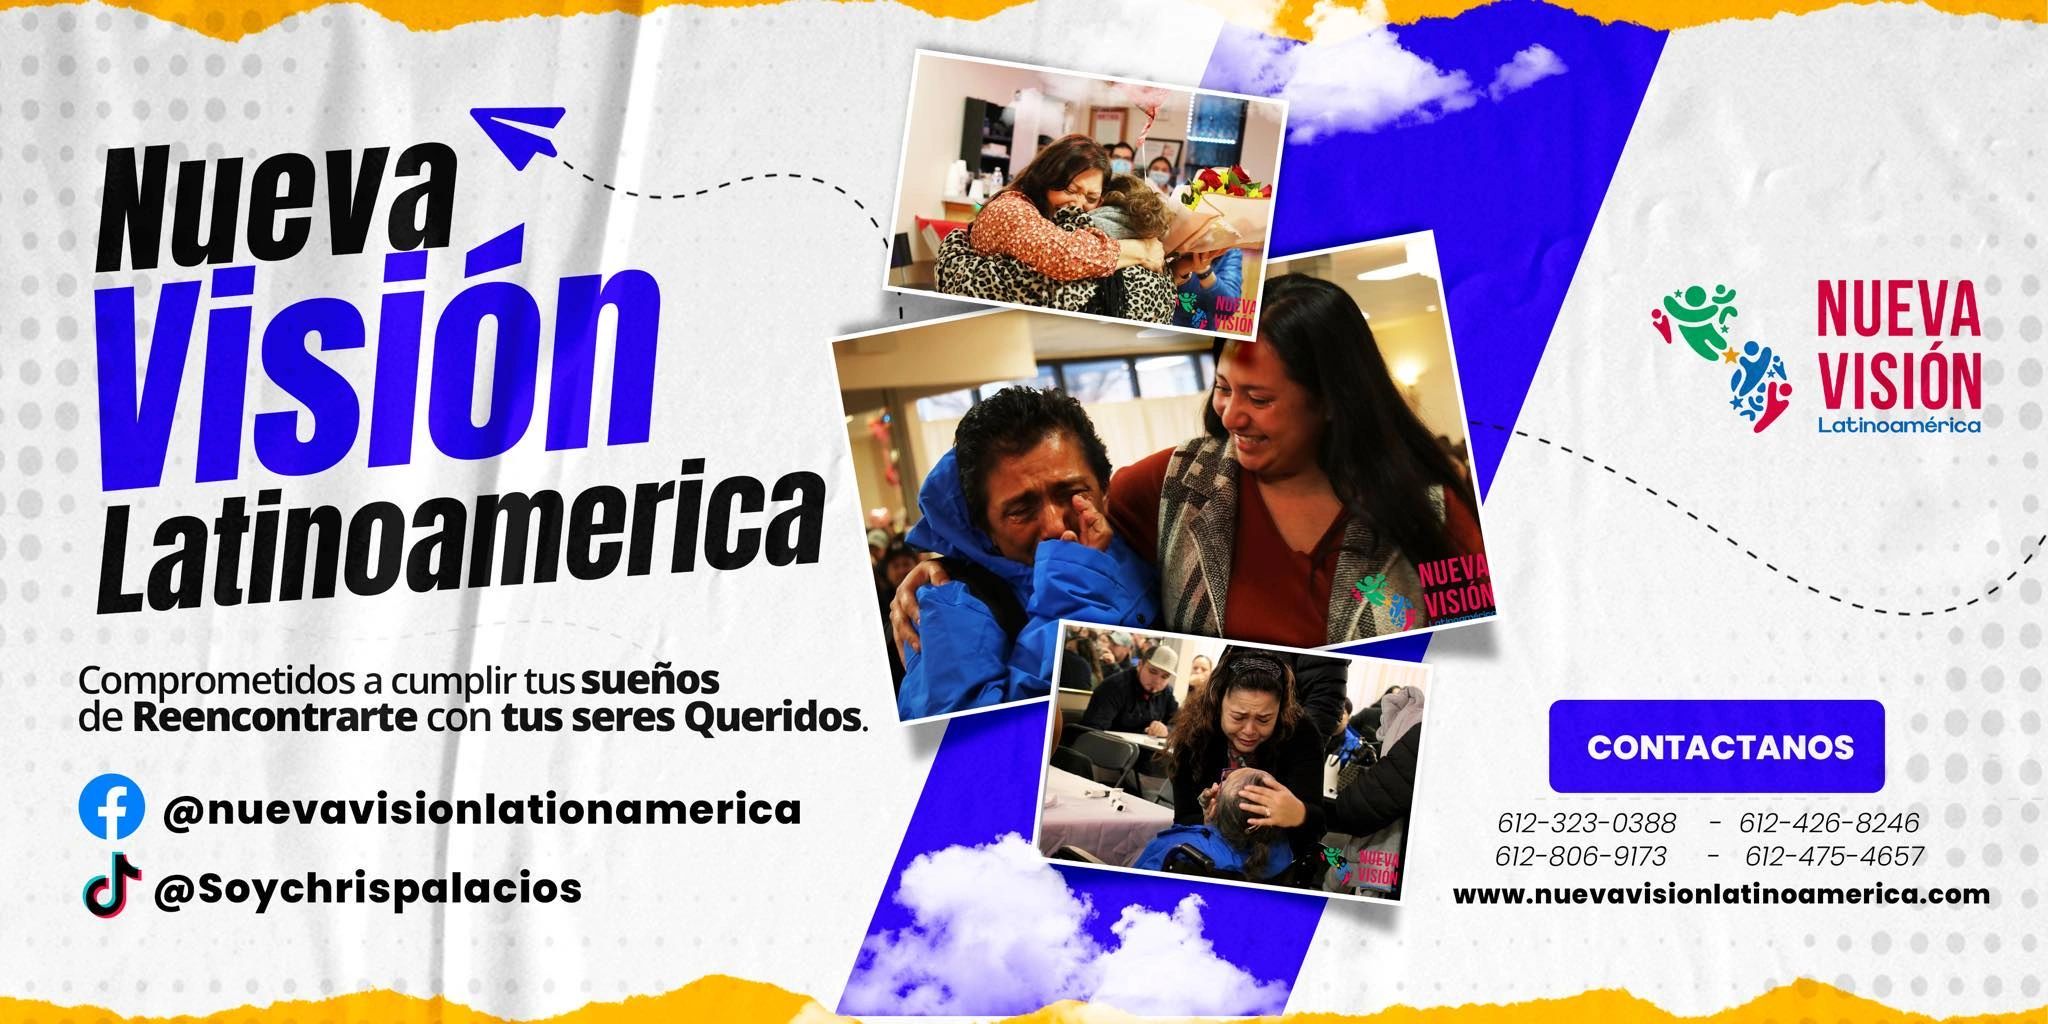 Nueva Vision Latinoamerica - Reunificacion Familiar, Visa Americana